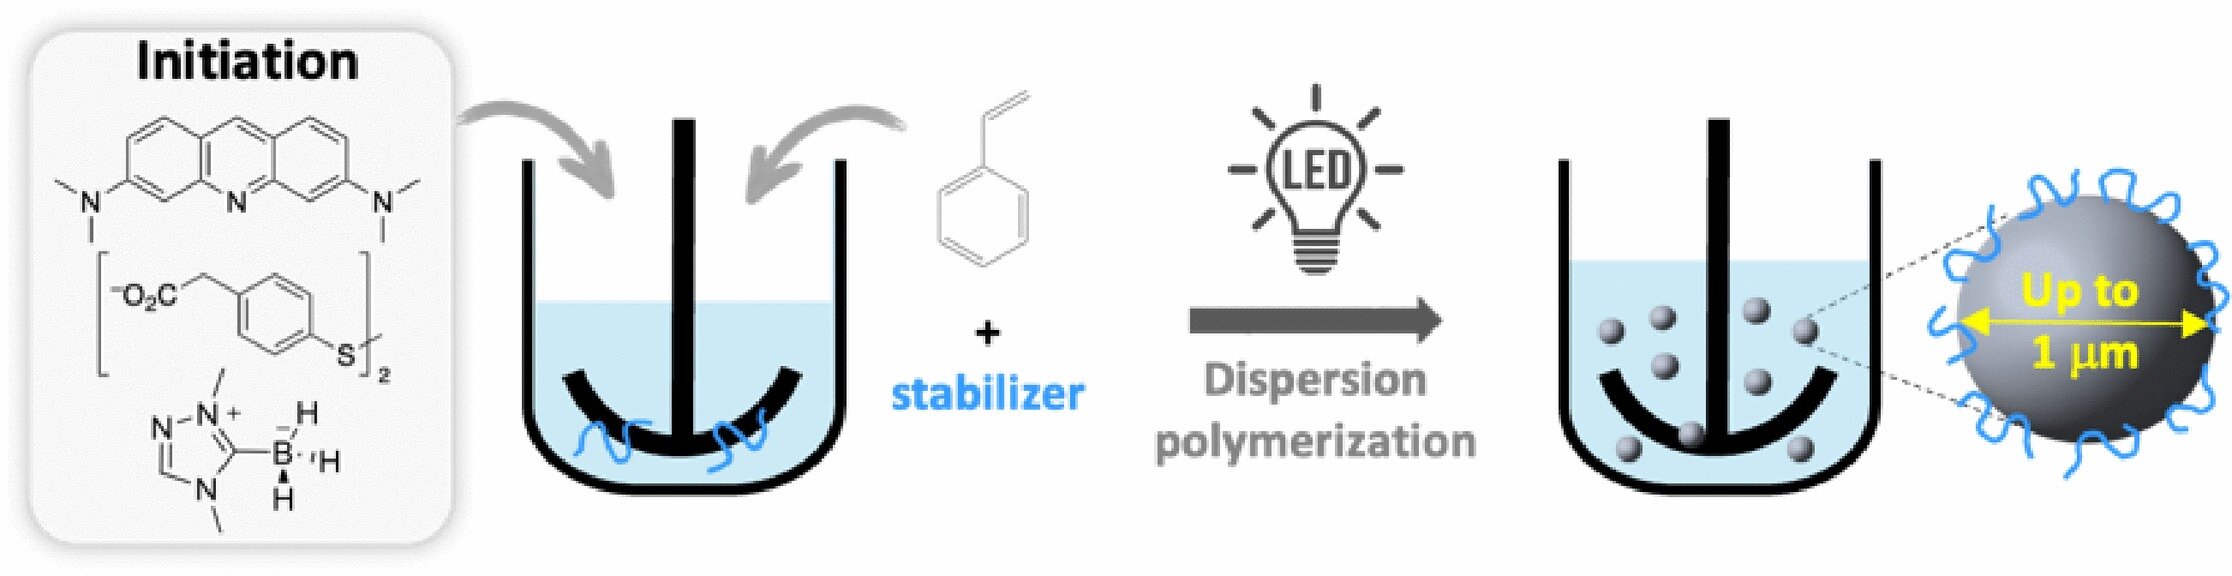 Produksi microparticles polystyrene homogen dina dispersi stabil